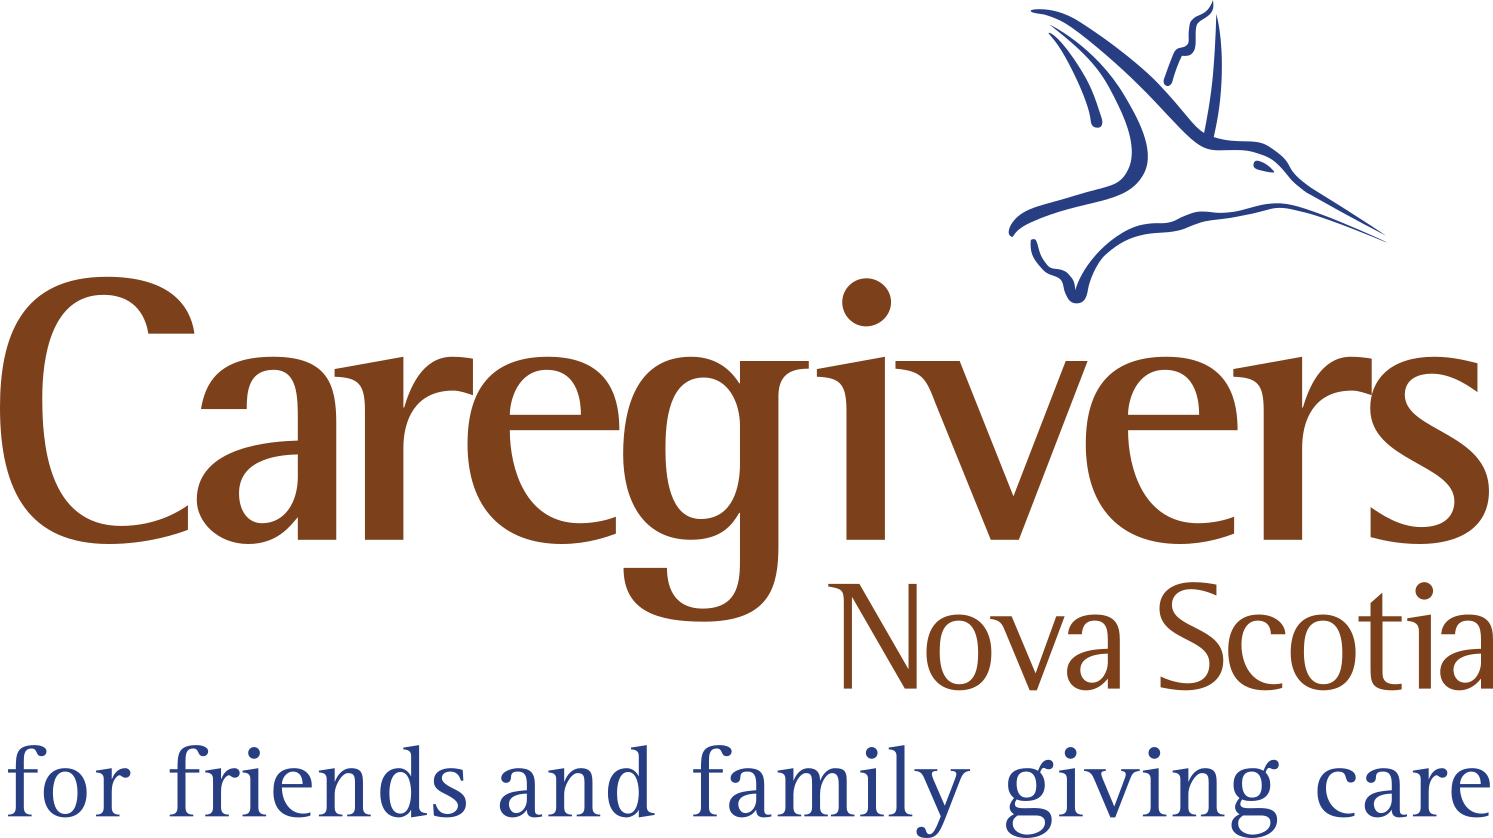 Caregivers Nova Scotia